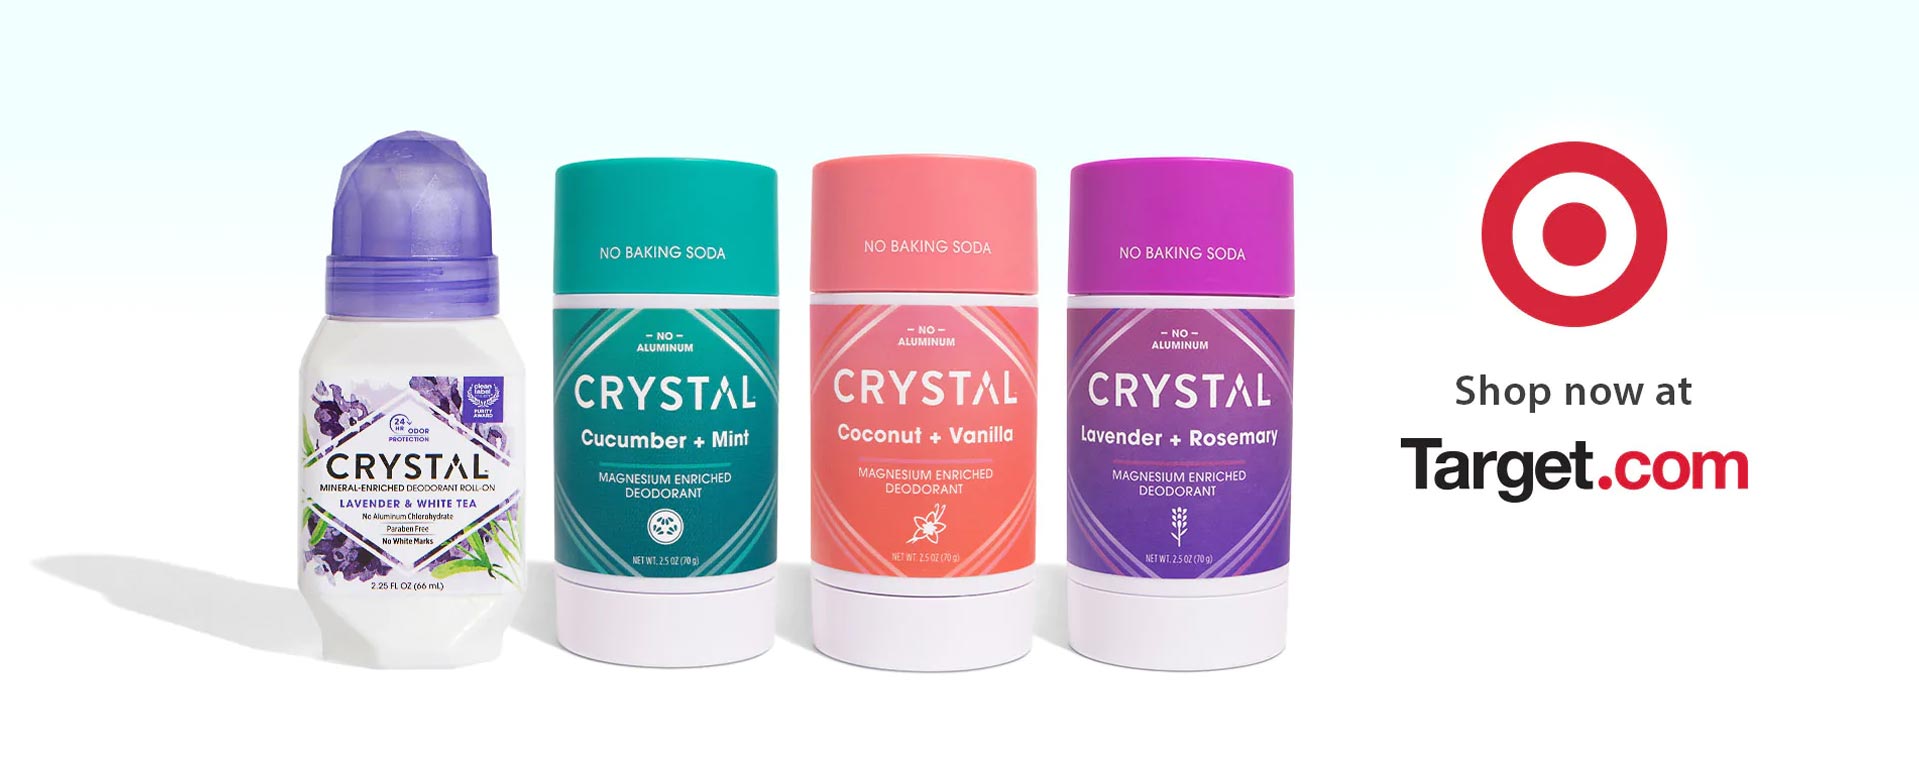 CRYSTAL™ The Original, Safe, Natural Salt – CRYSTAL™